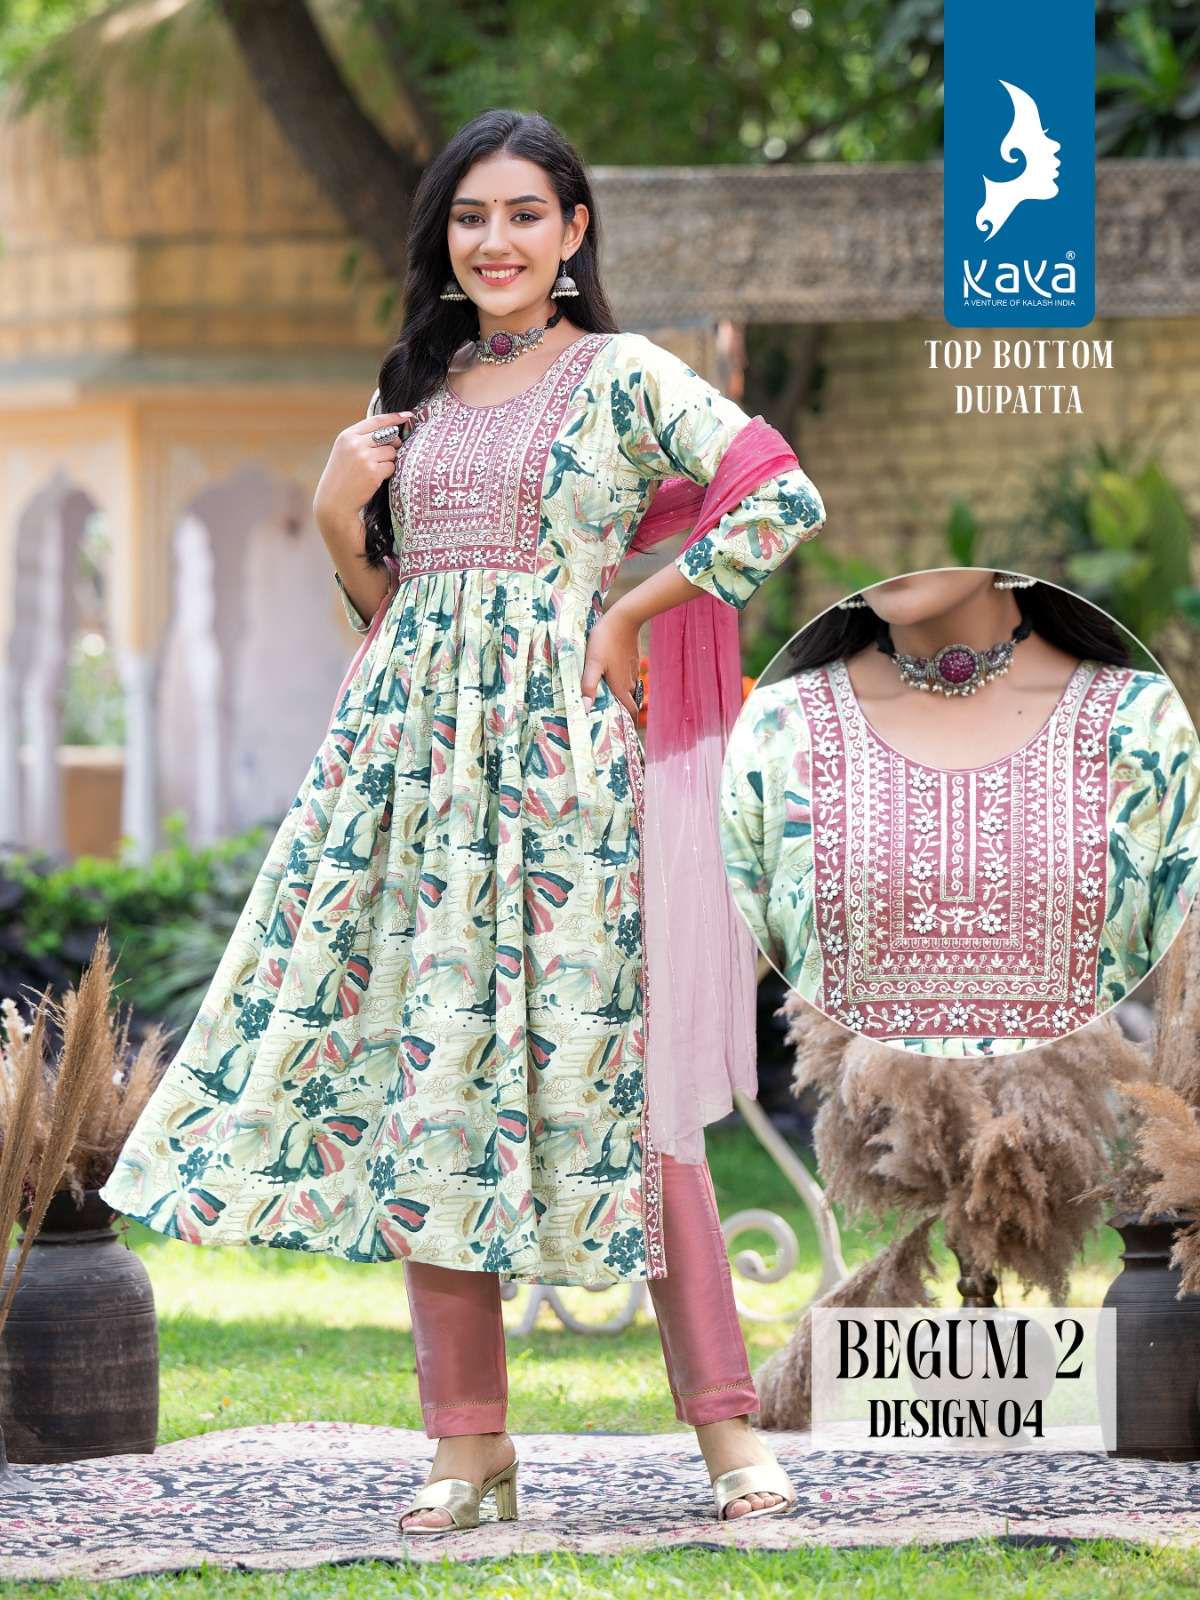 kaya kurti begum vol-2 01-06 series latest designer nyra cut kurti set wholesaler surat gujarat